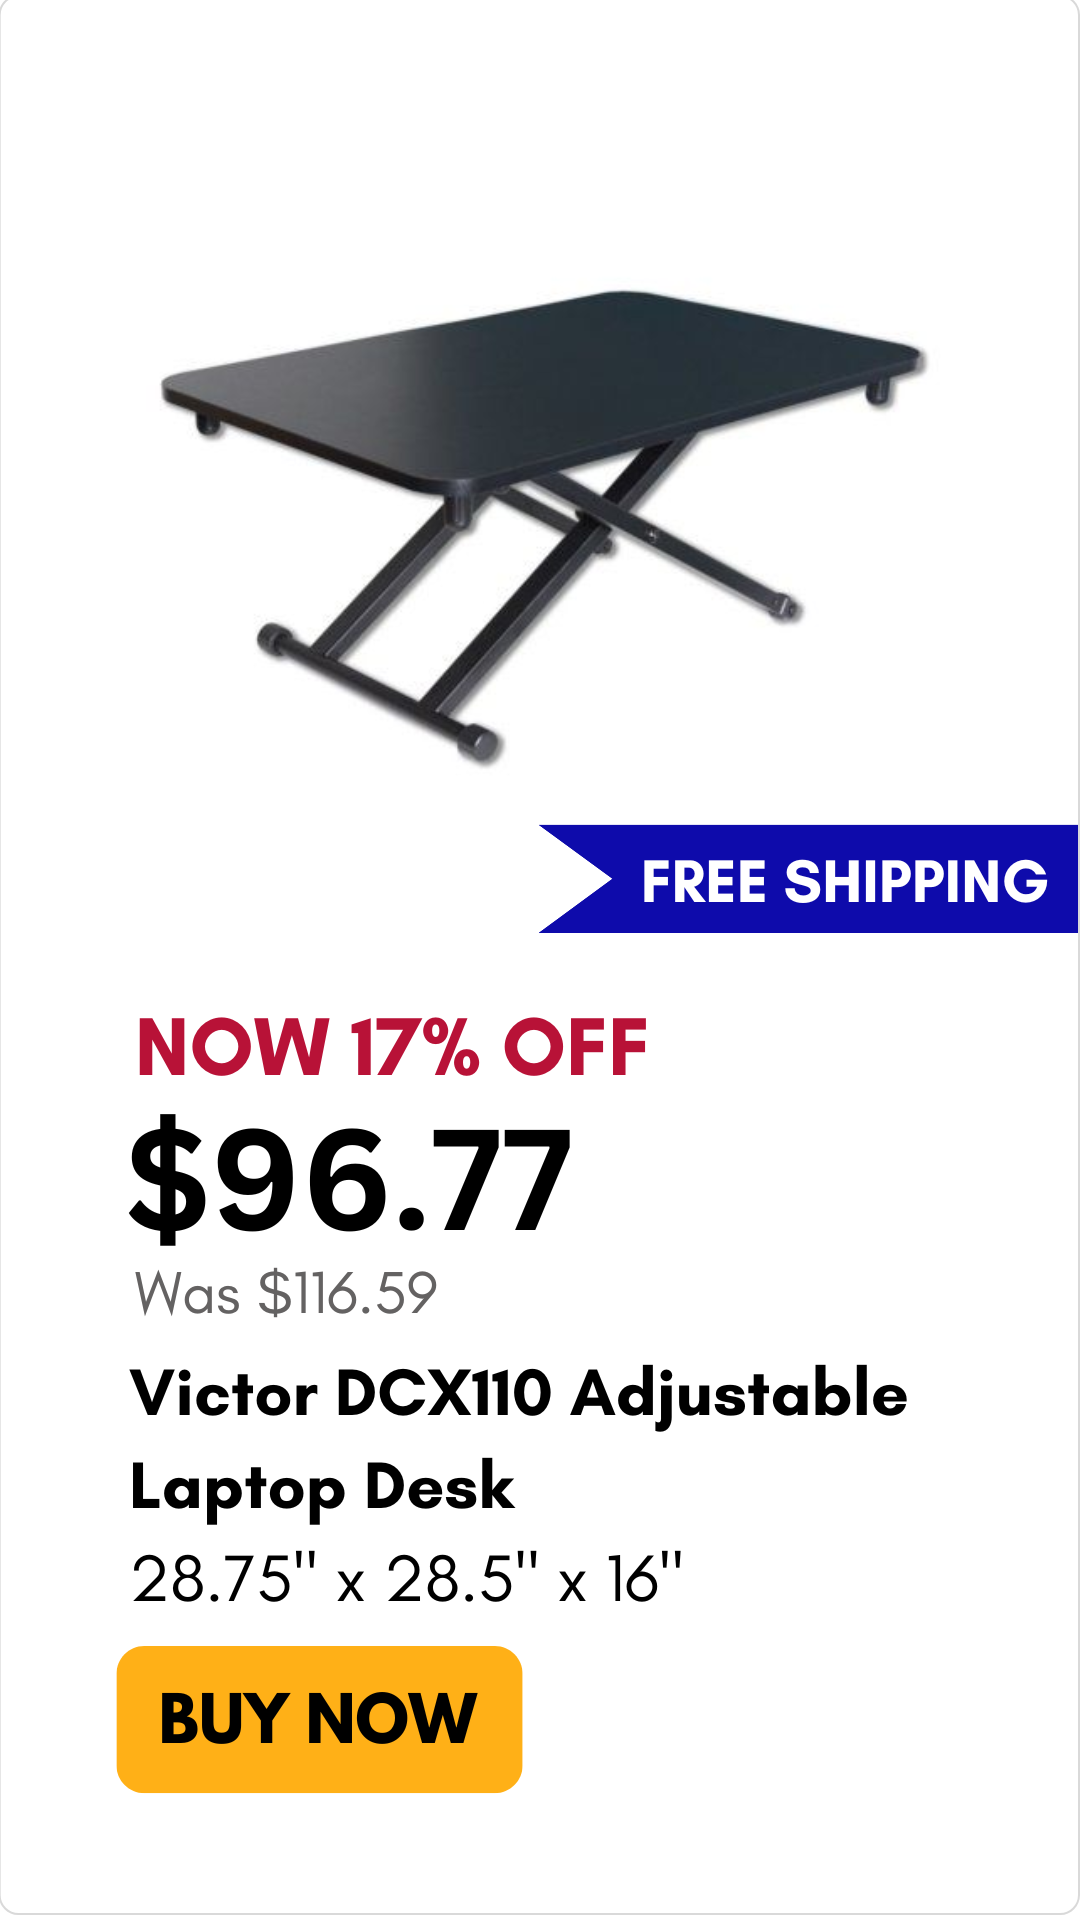 Victor DCX110 Adjustable Laptop Desk on sale for 17% off at MyBinding.com